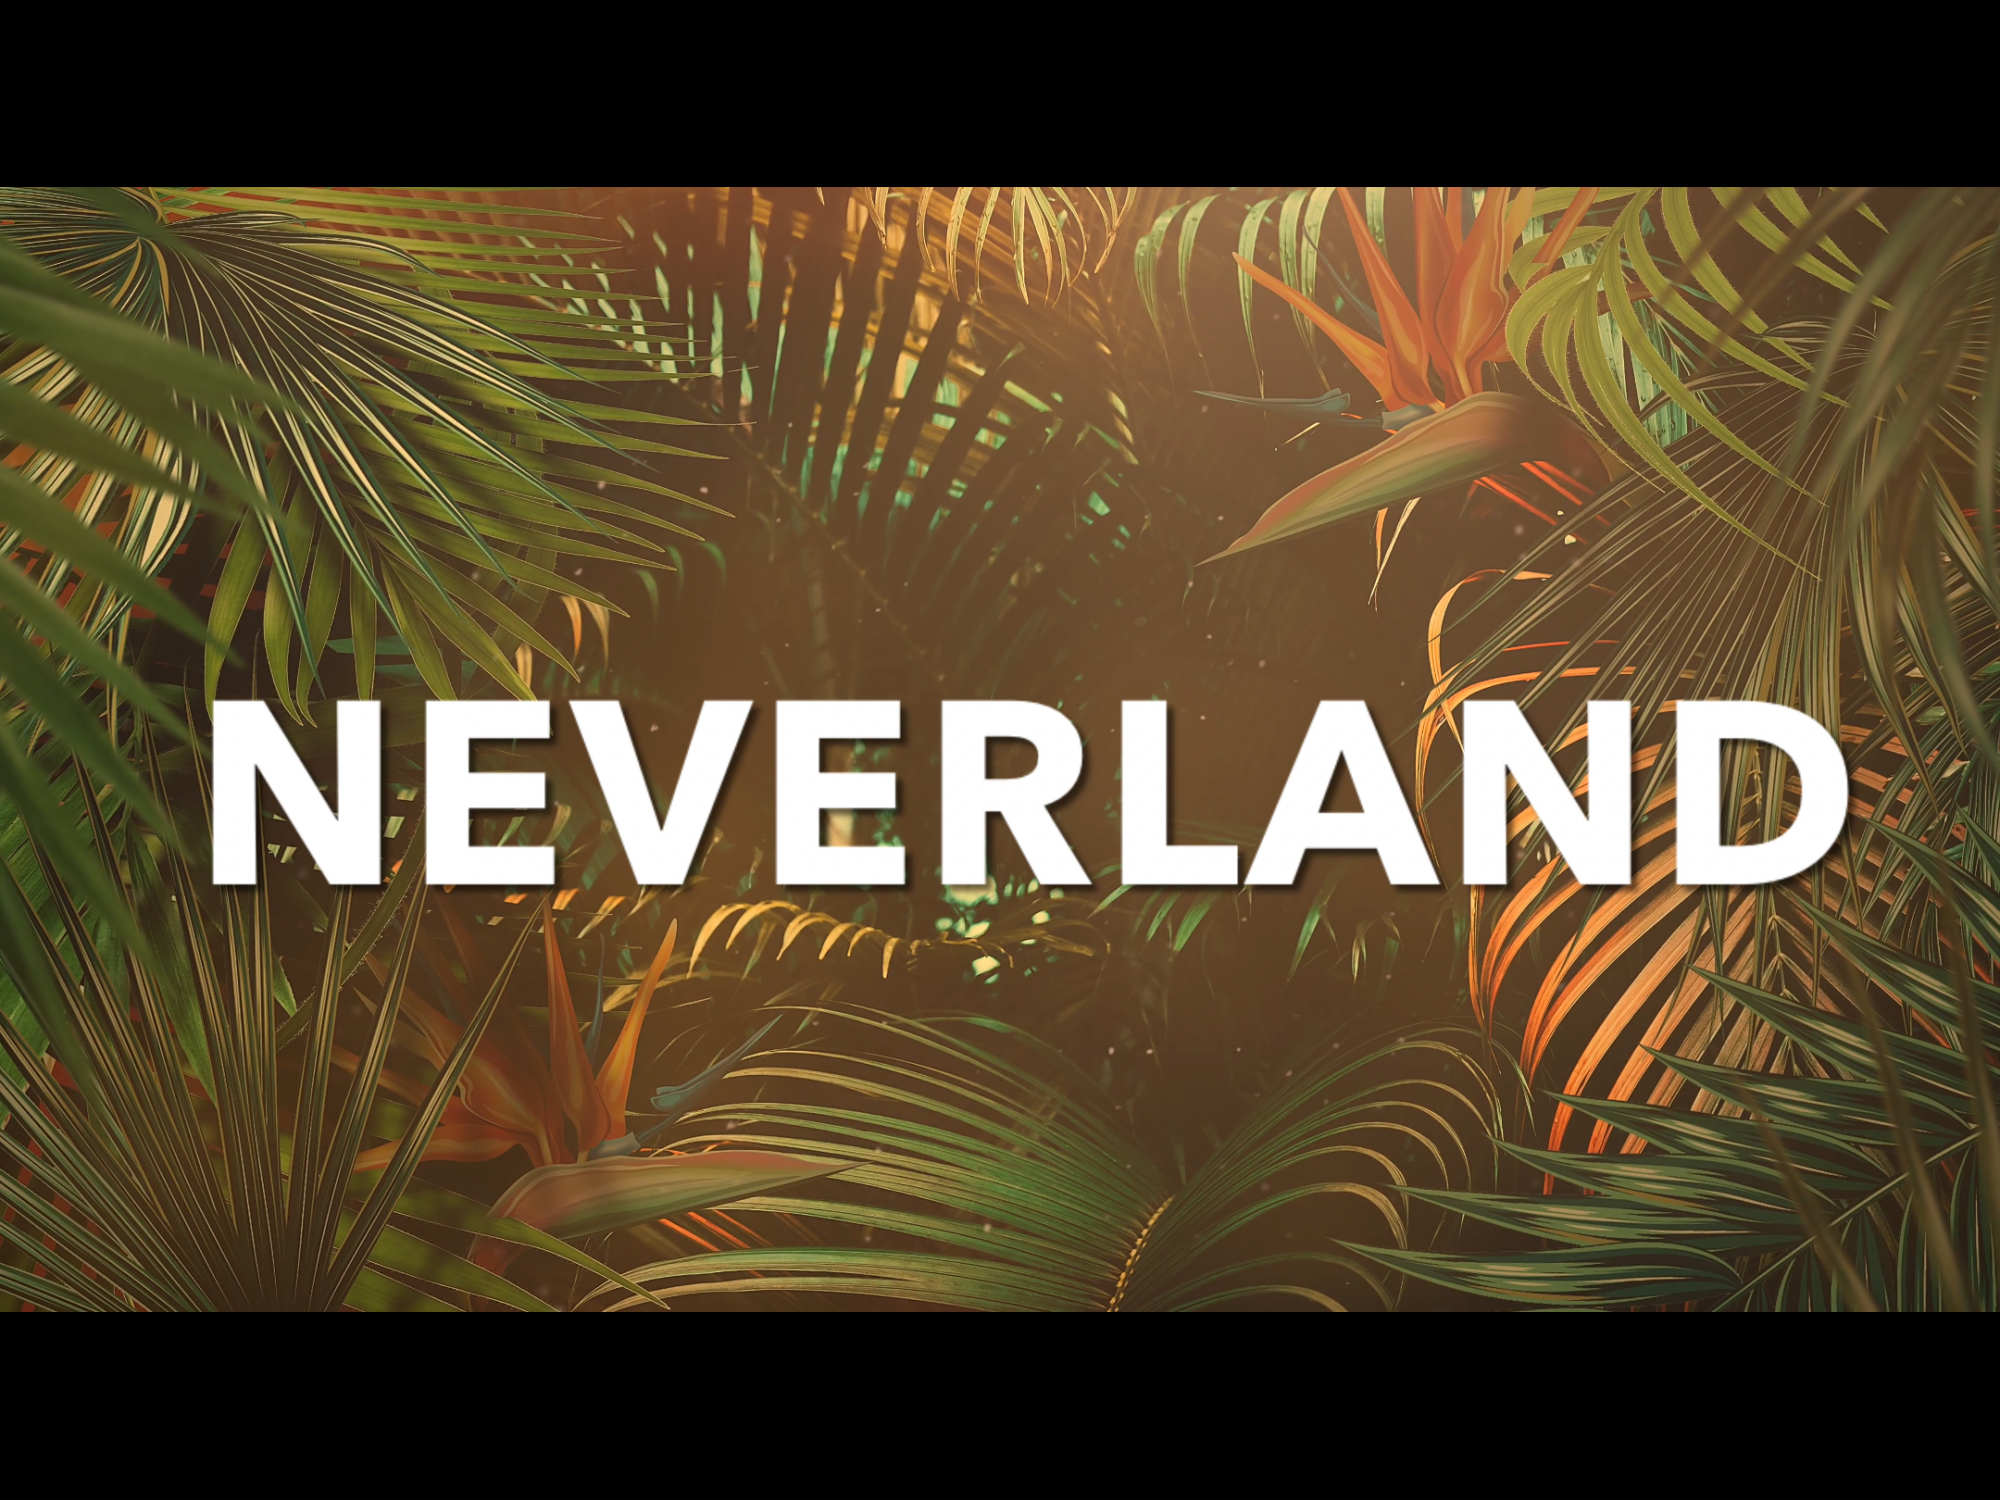 'Neverland' title on a jungle foliage background